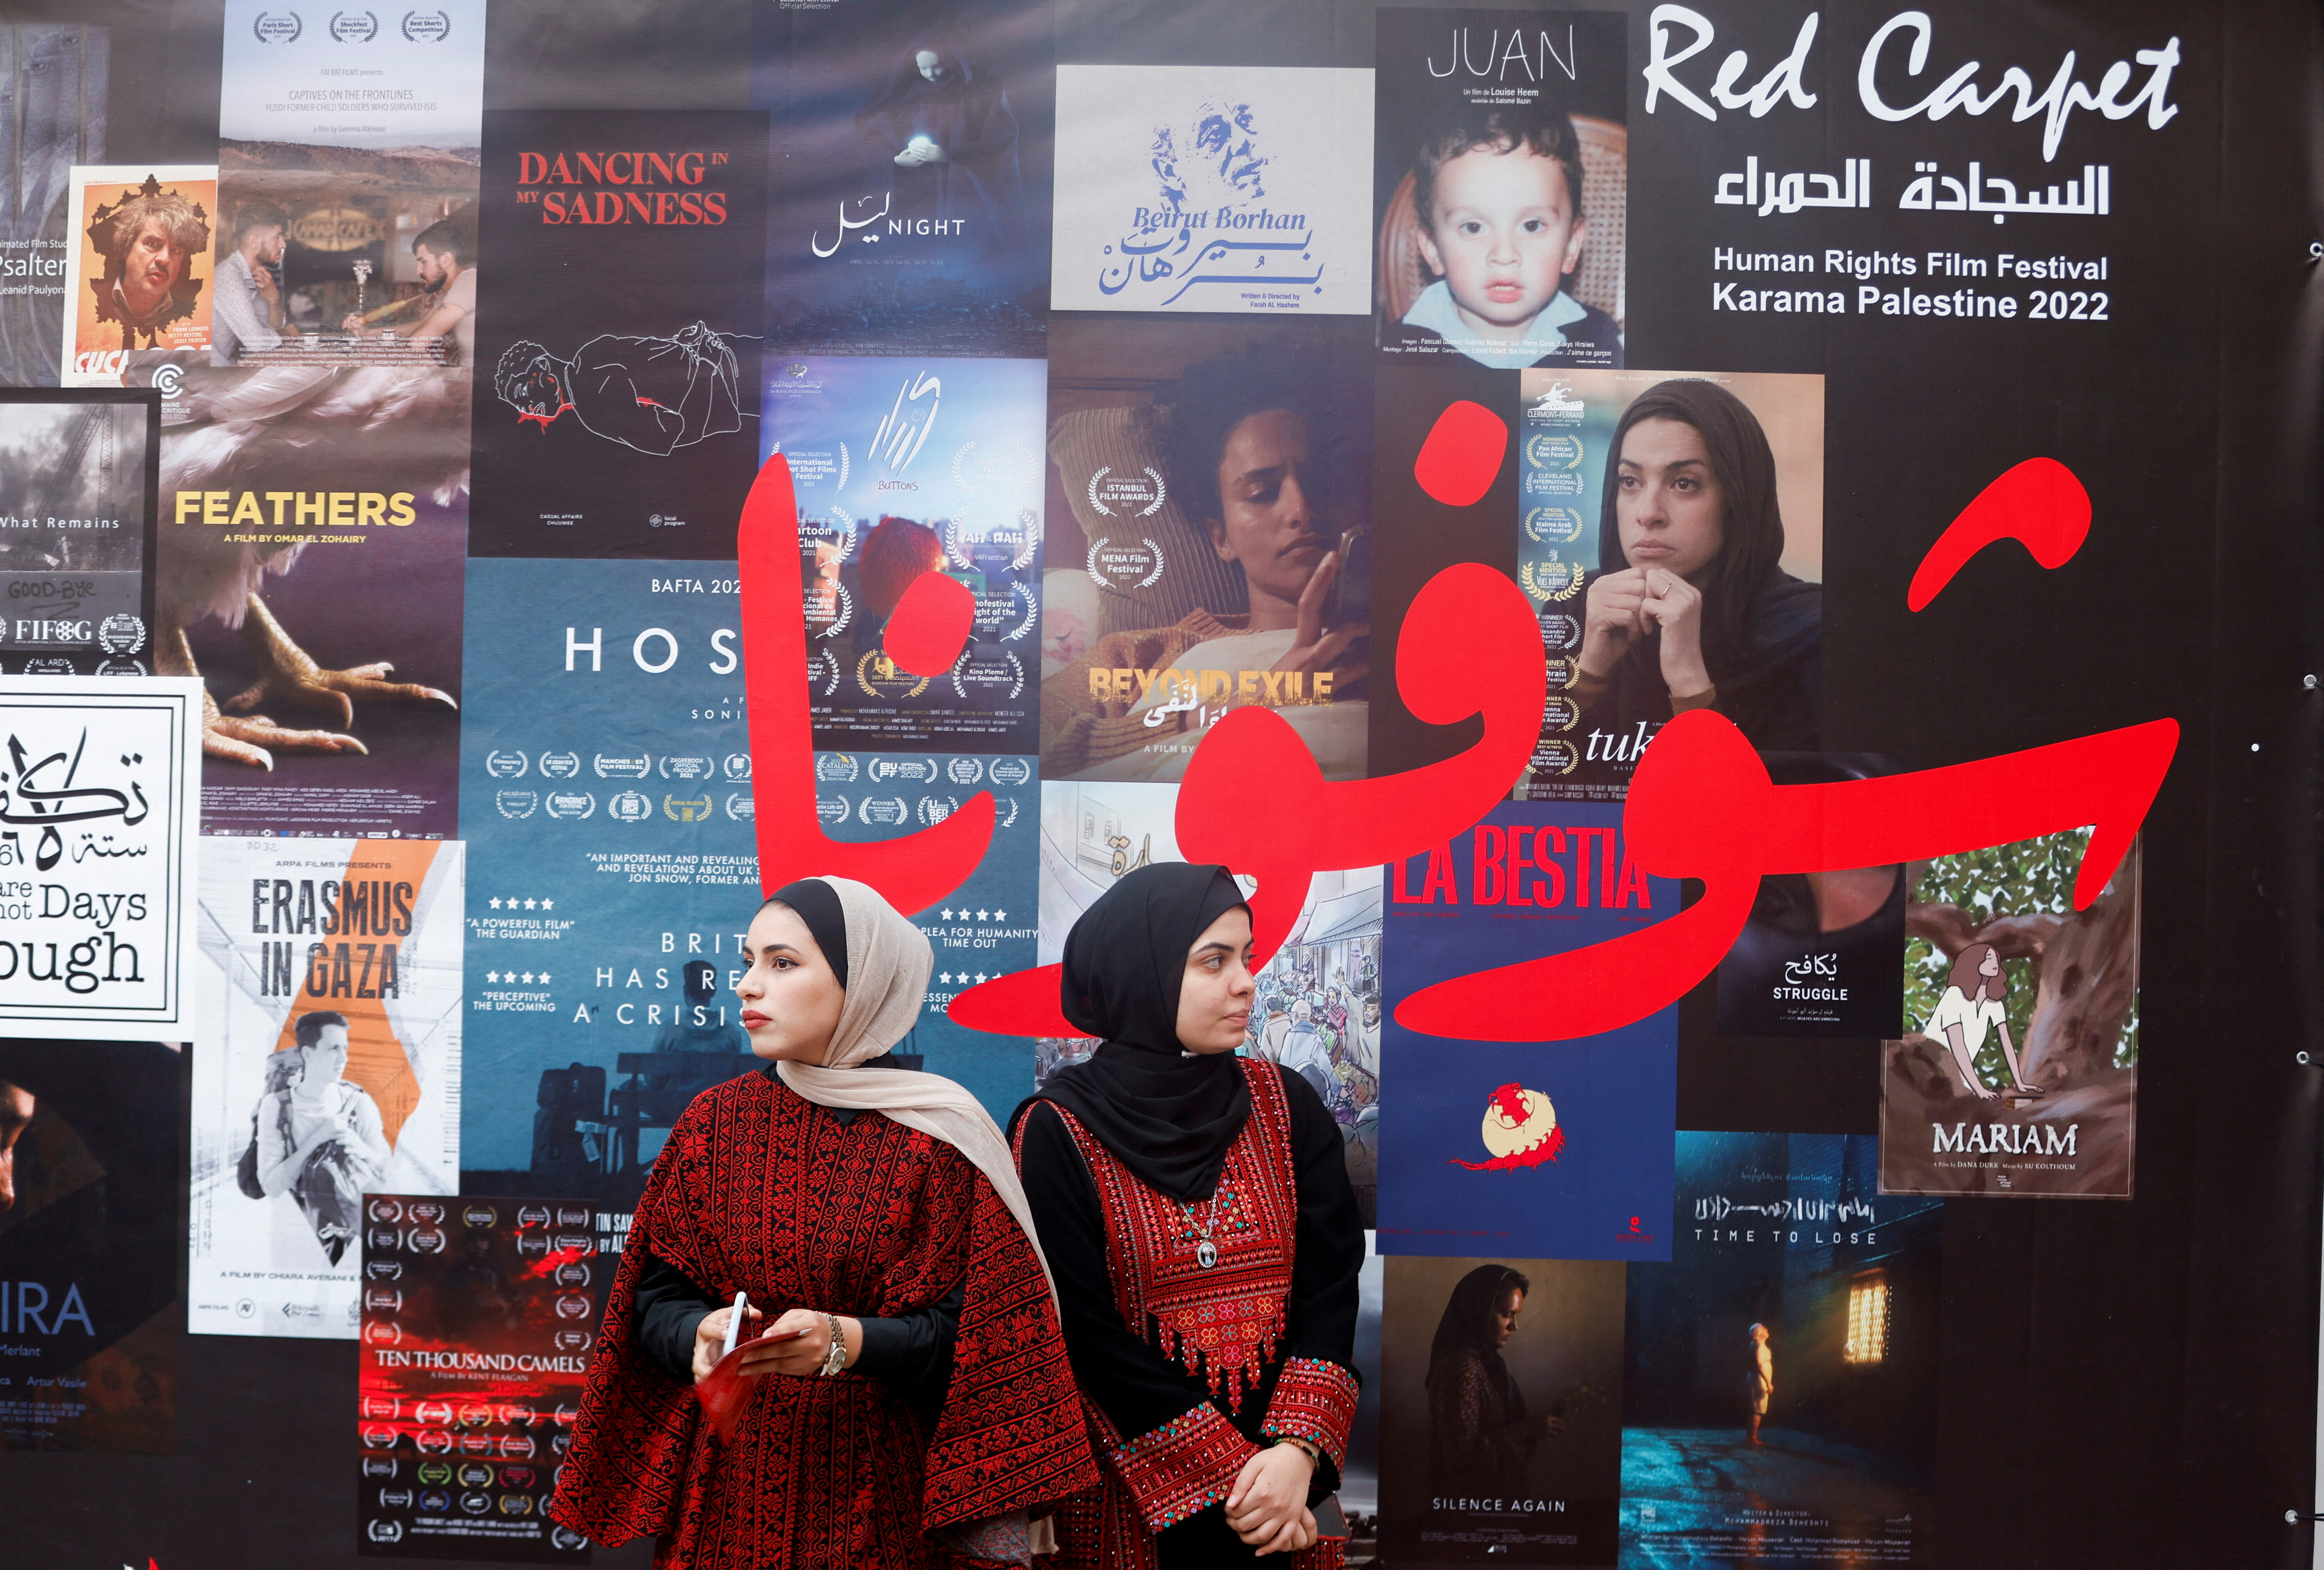 Gazans enjoy rare cinema show, urge cinemas be reopened